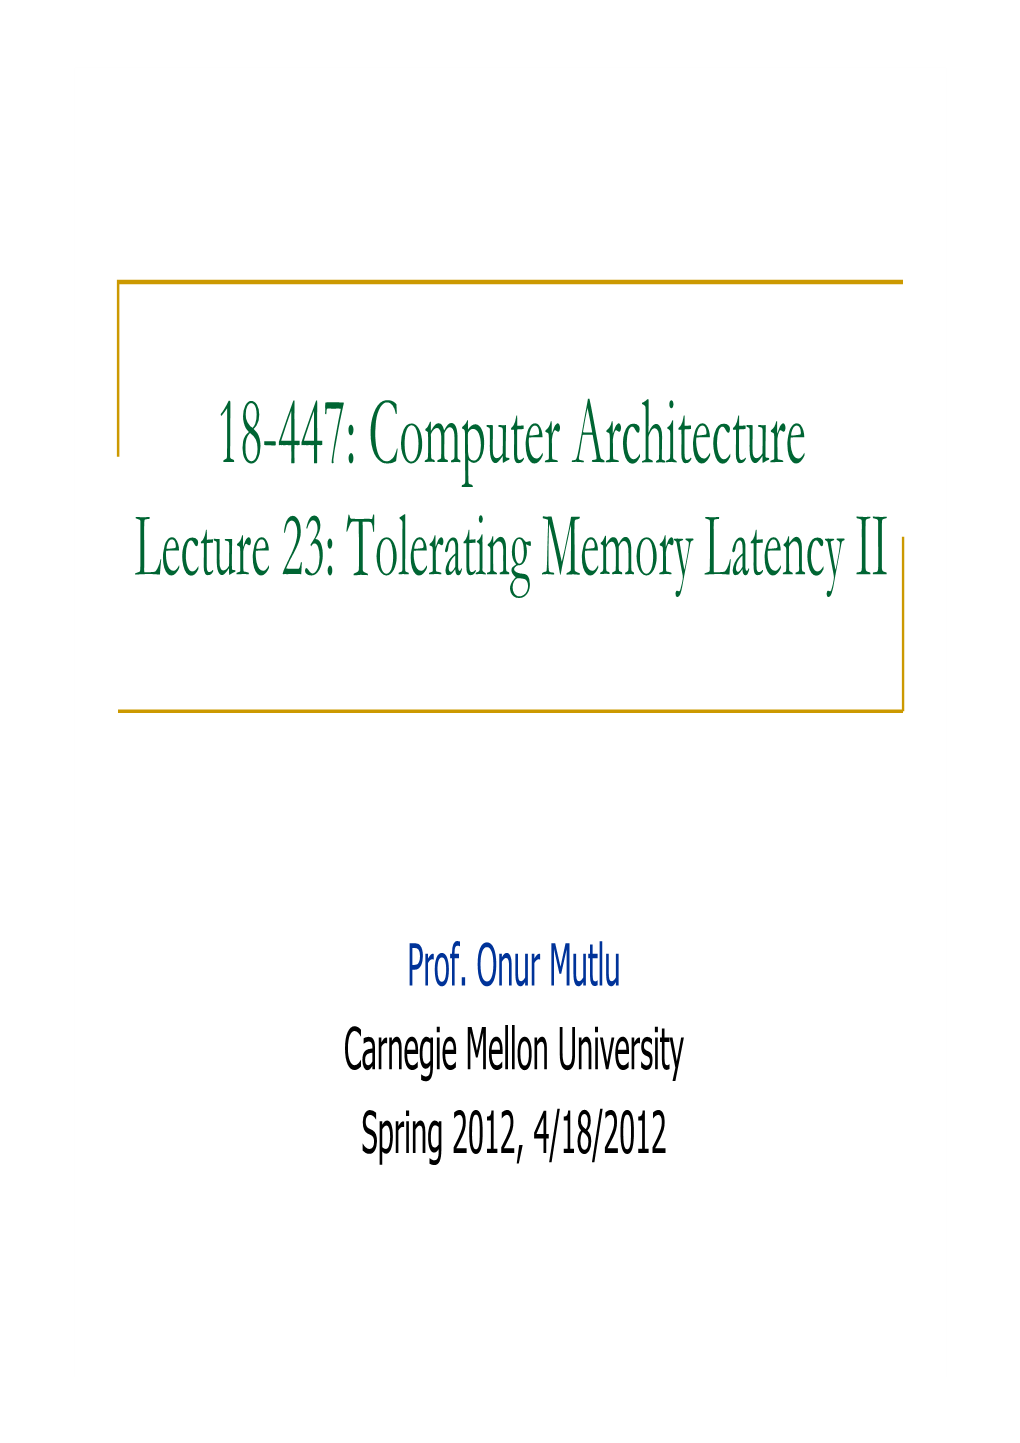 Onur-447-Spring12-Lecture23